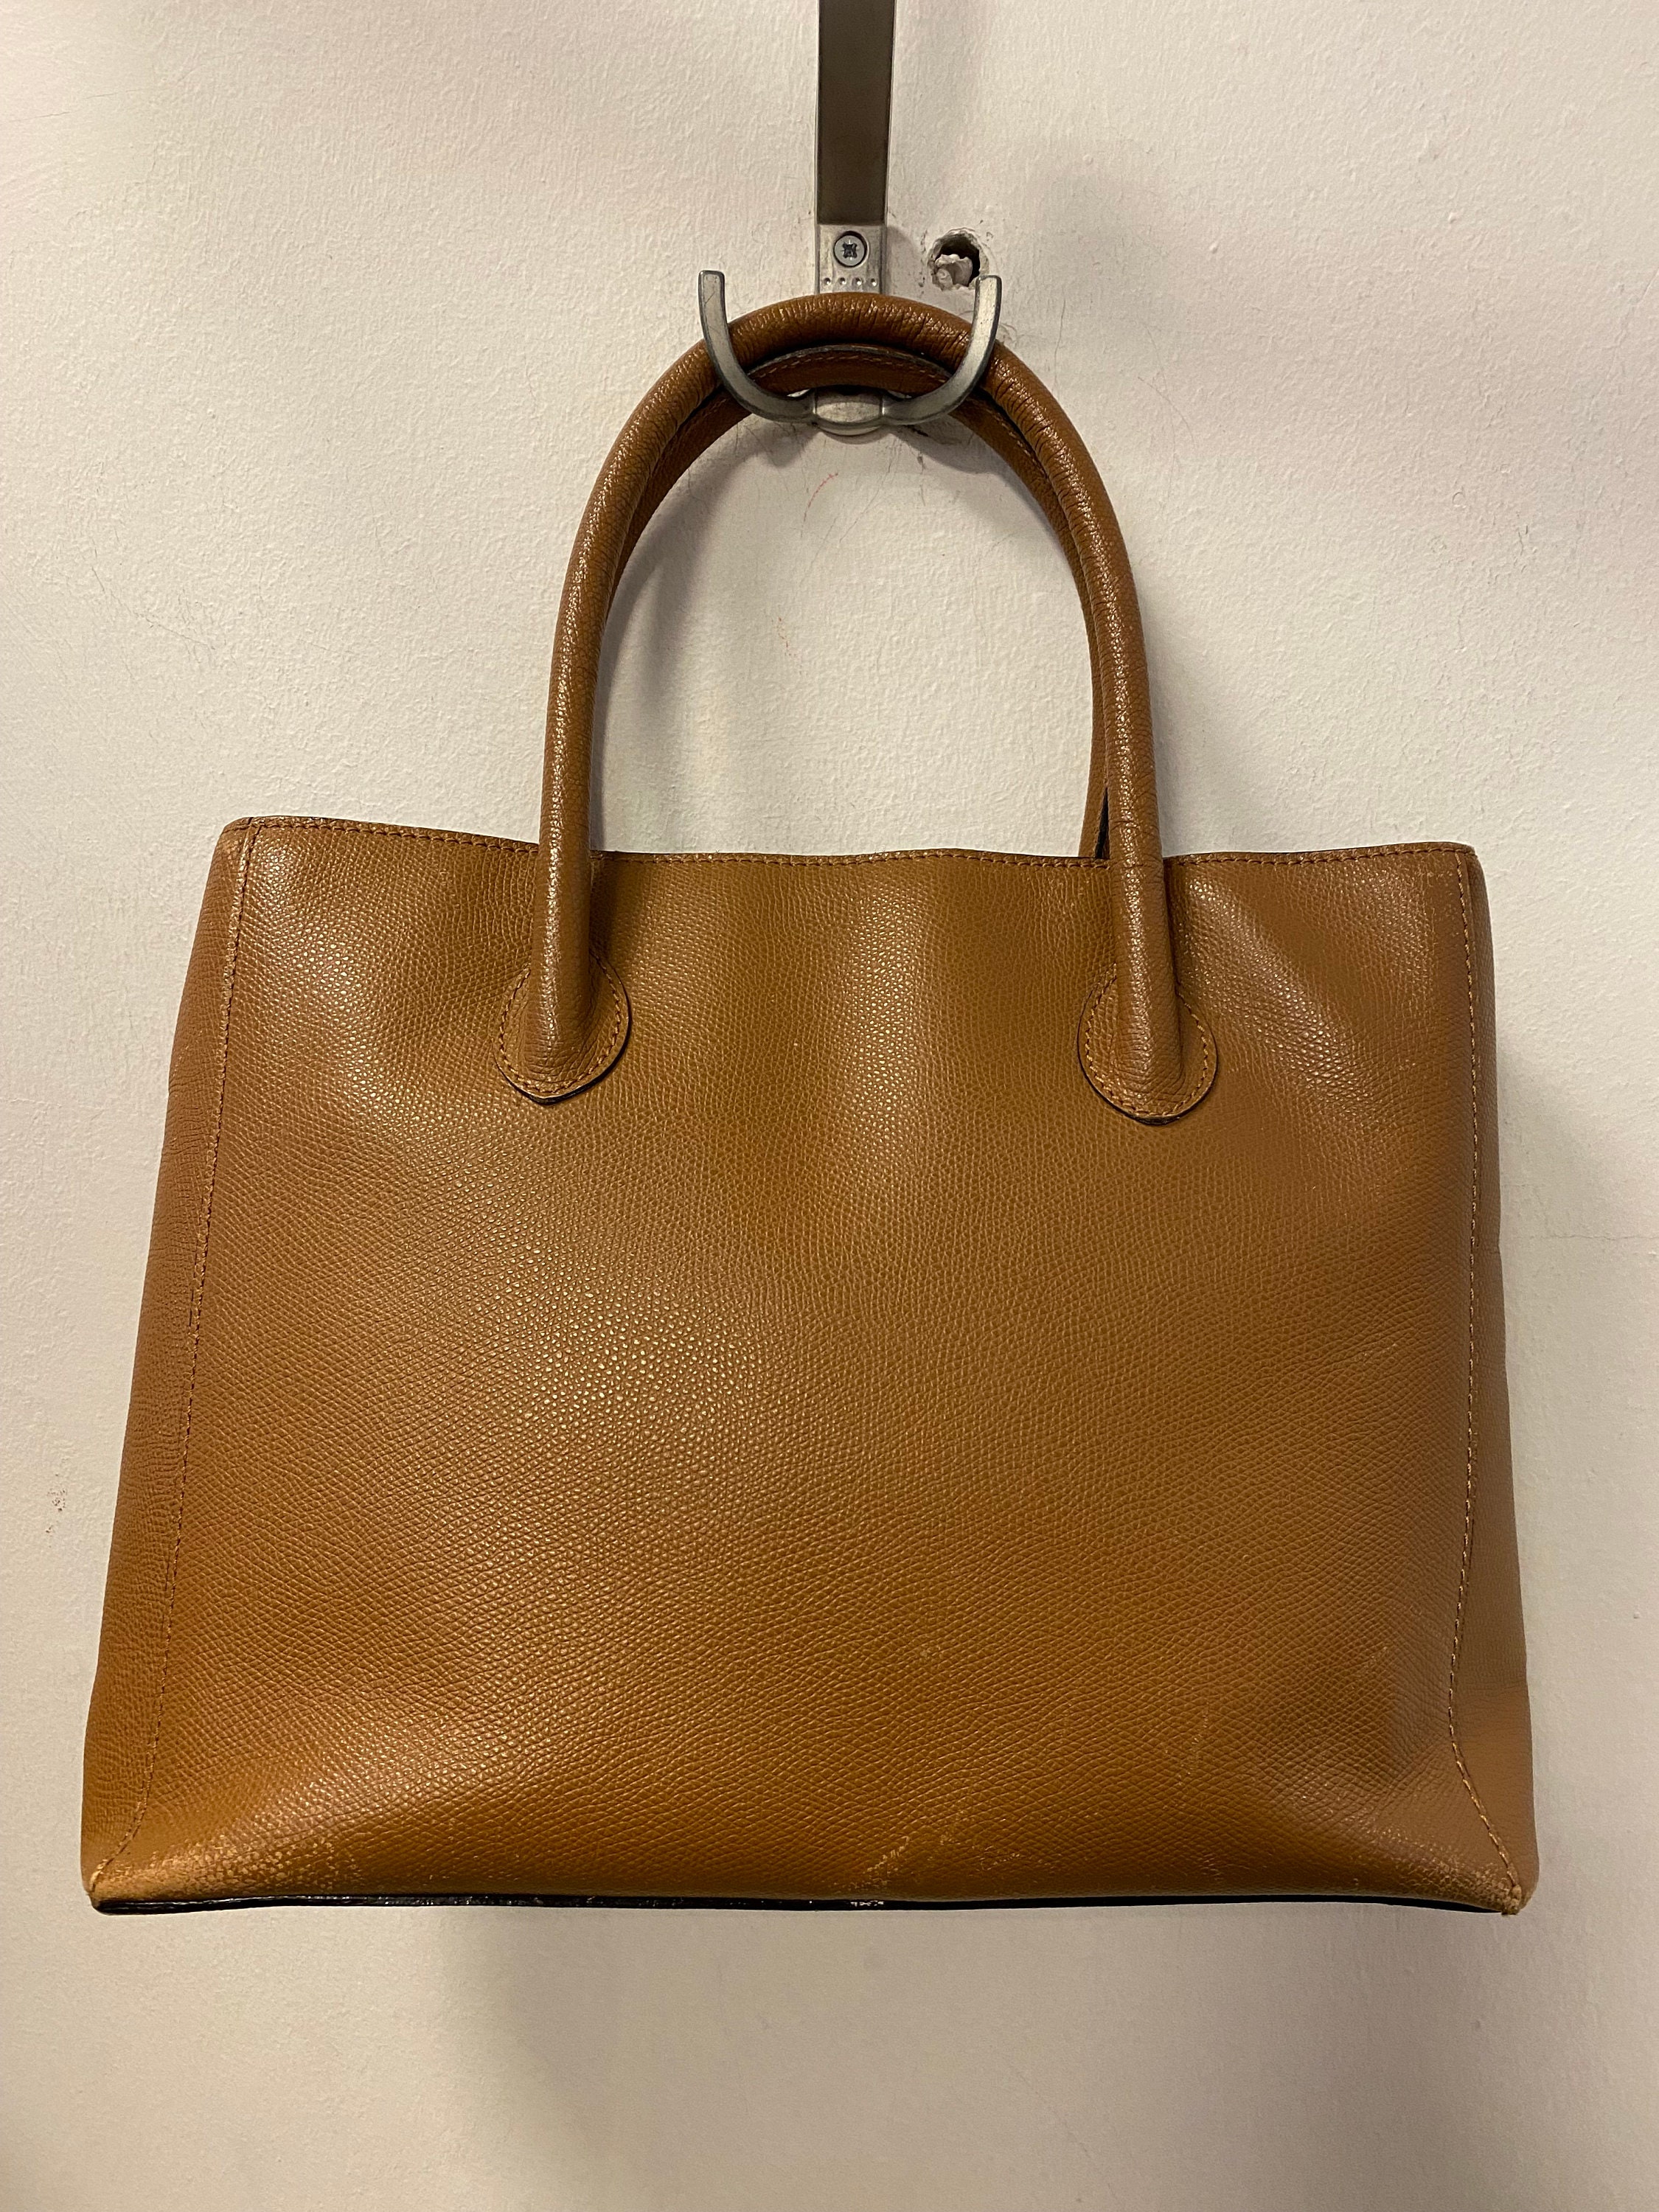 Celine - Authenticated Folco Handbag - Cloth Brown for Women, Good Condition